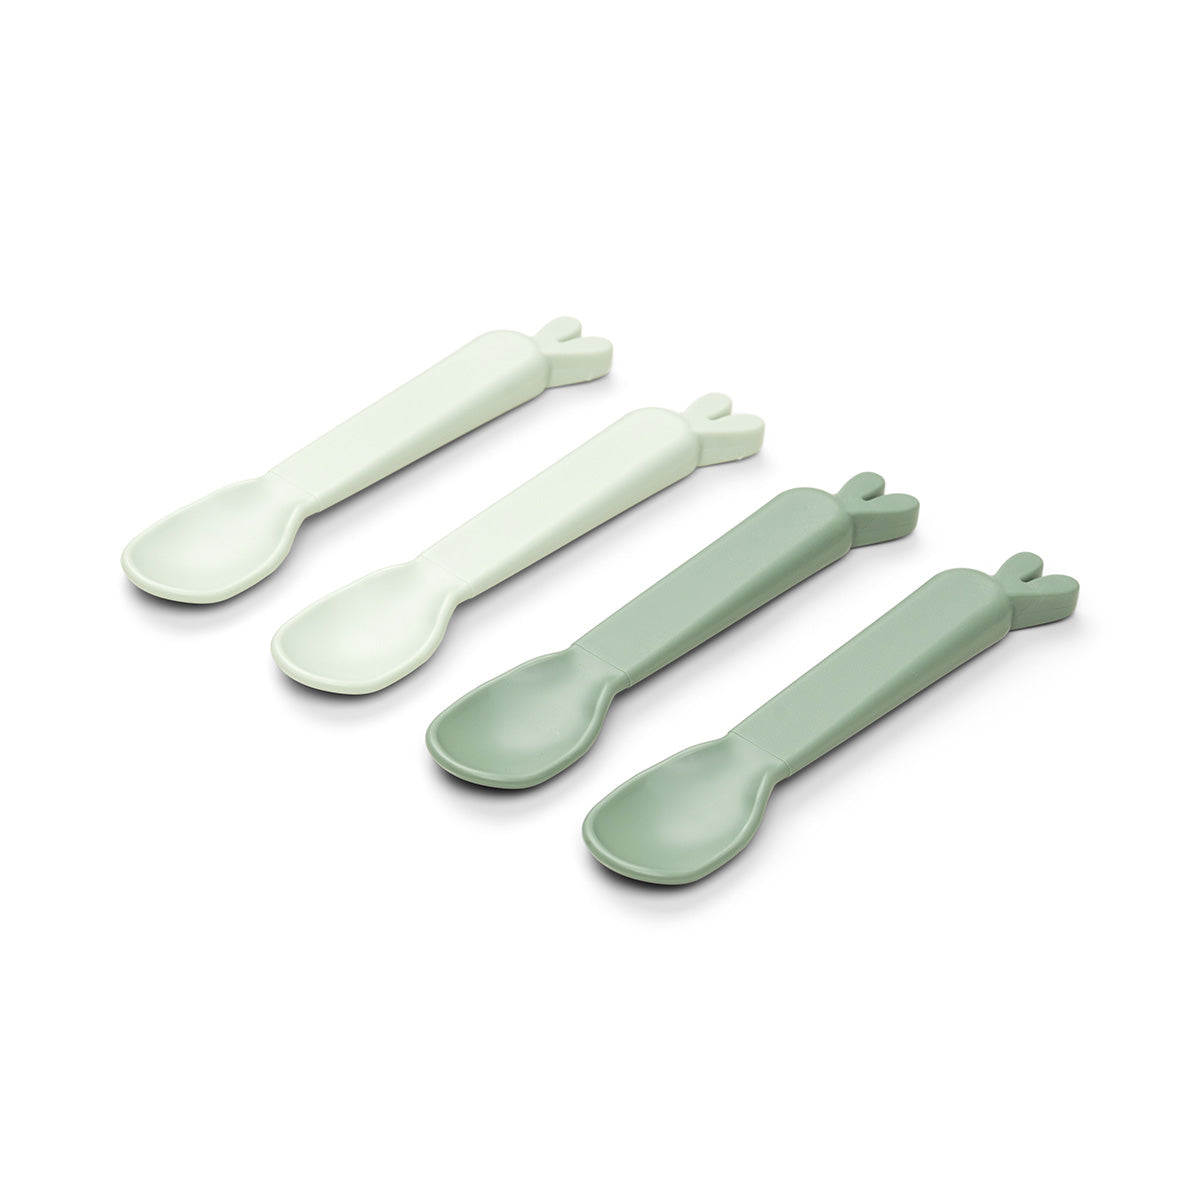 Kiddish spoon 4-pack - Lalee - Green